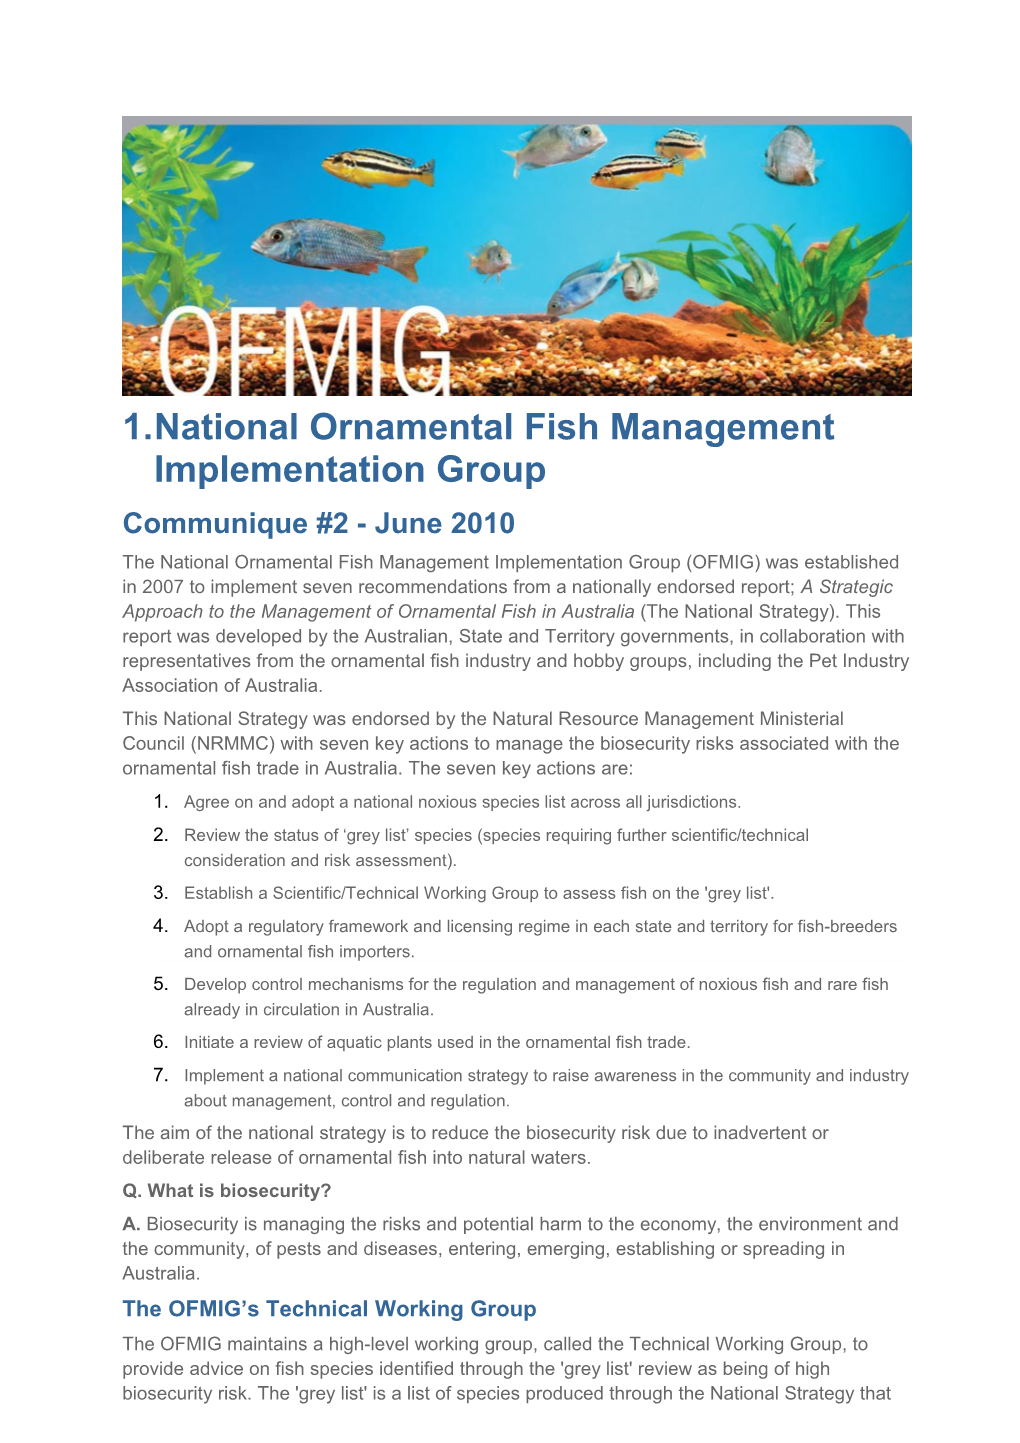 National Ornamental Fish Management Implementation Group